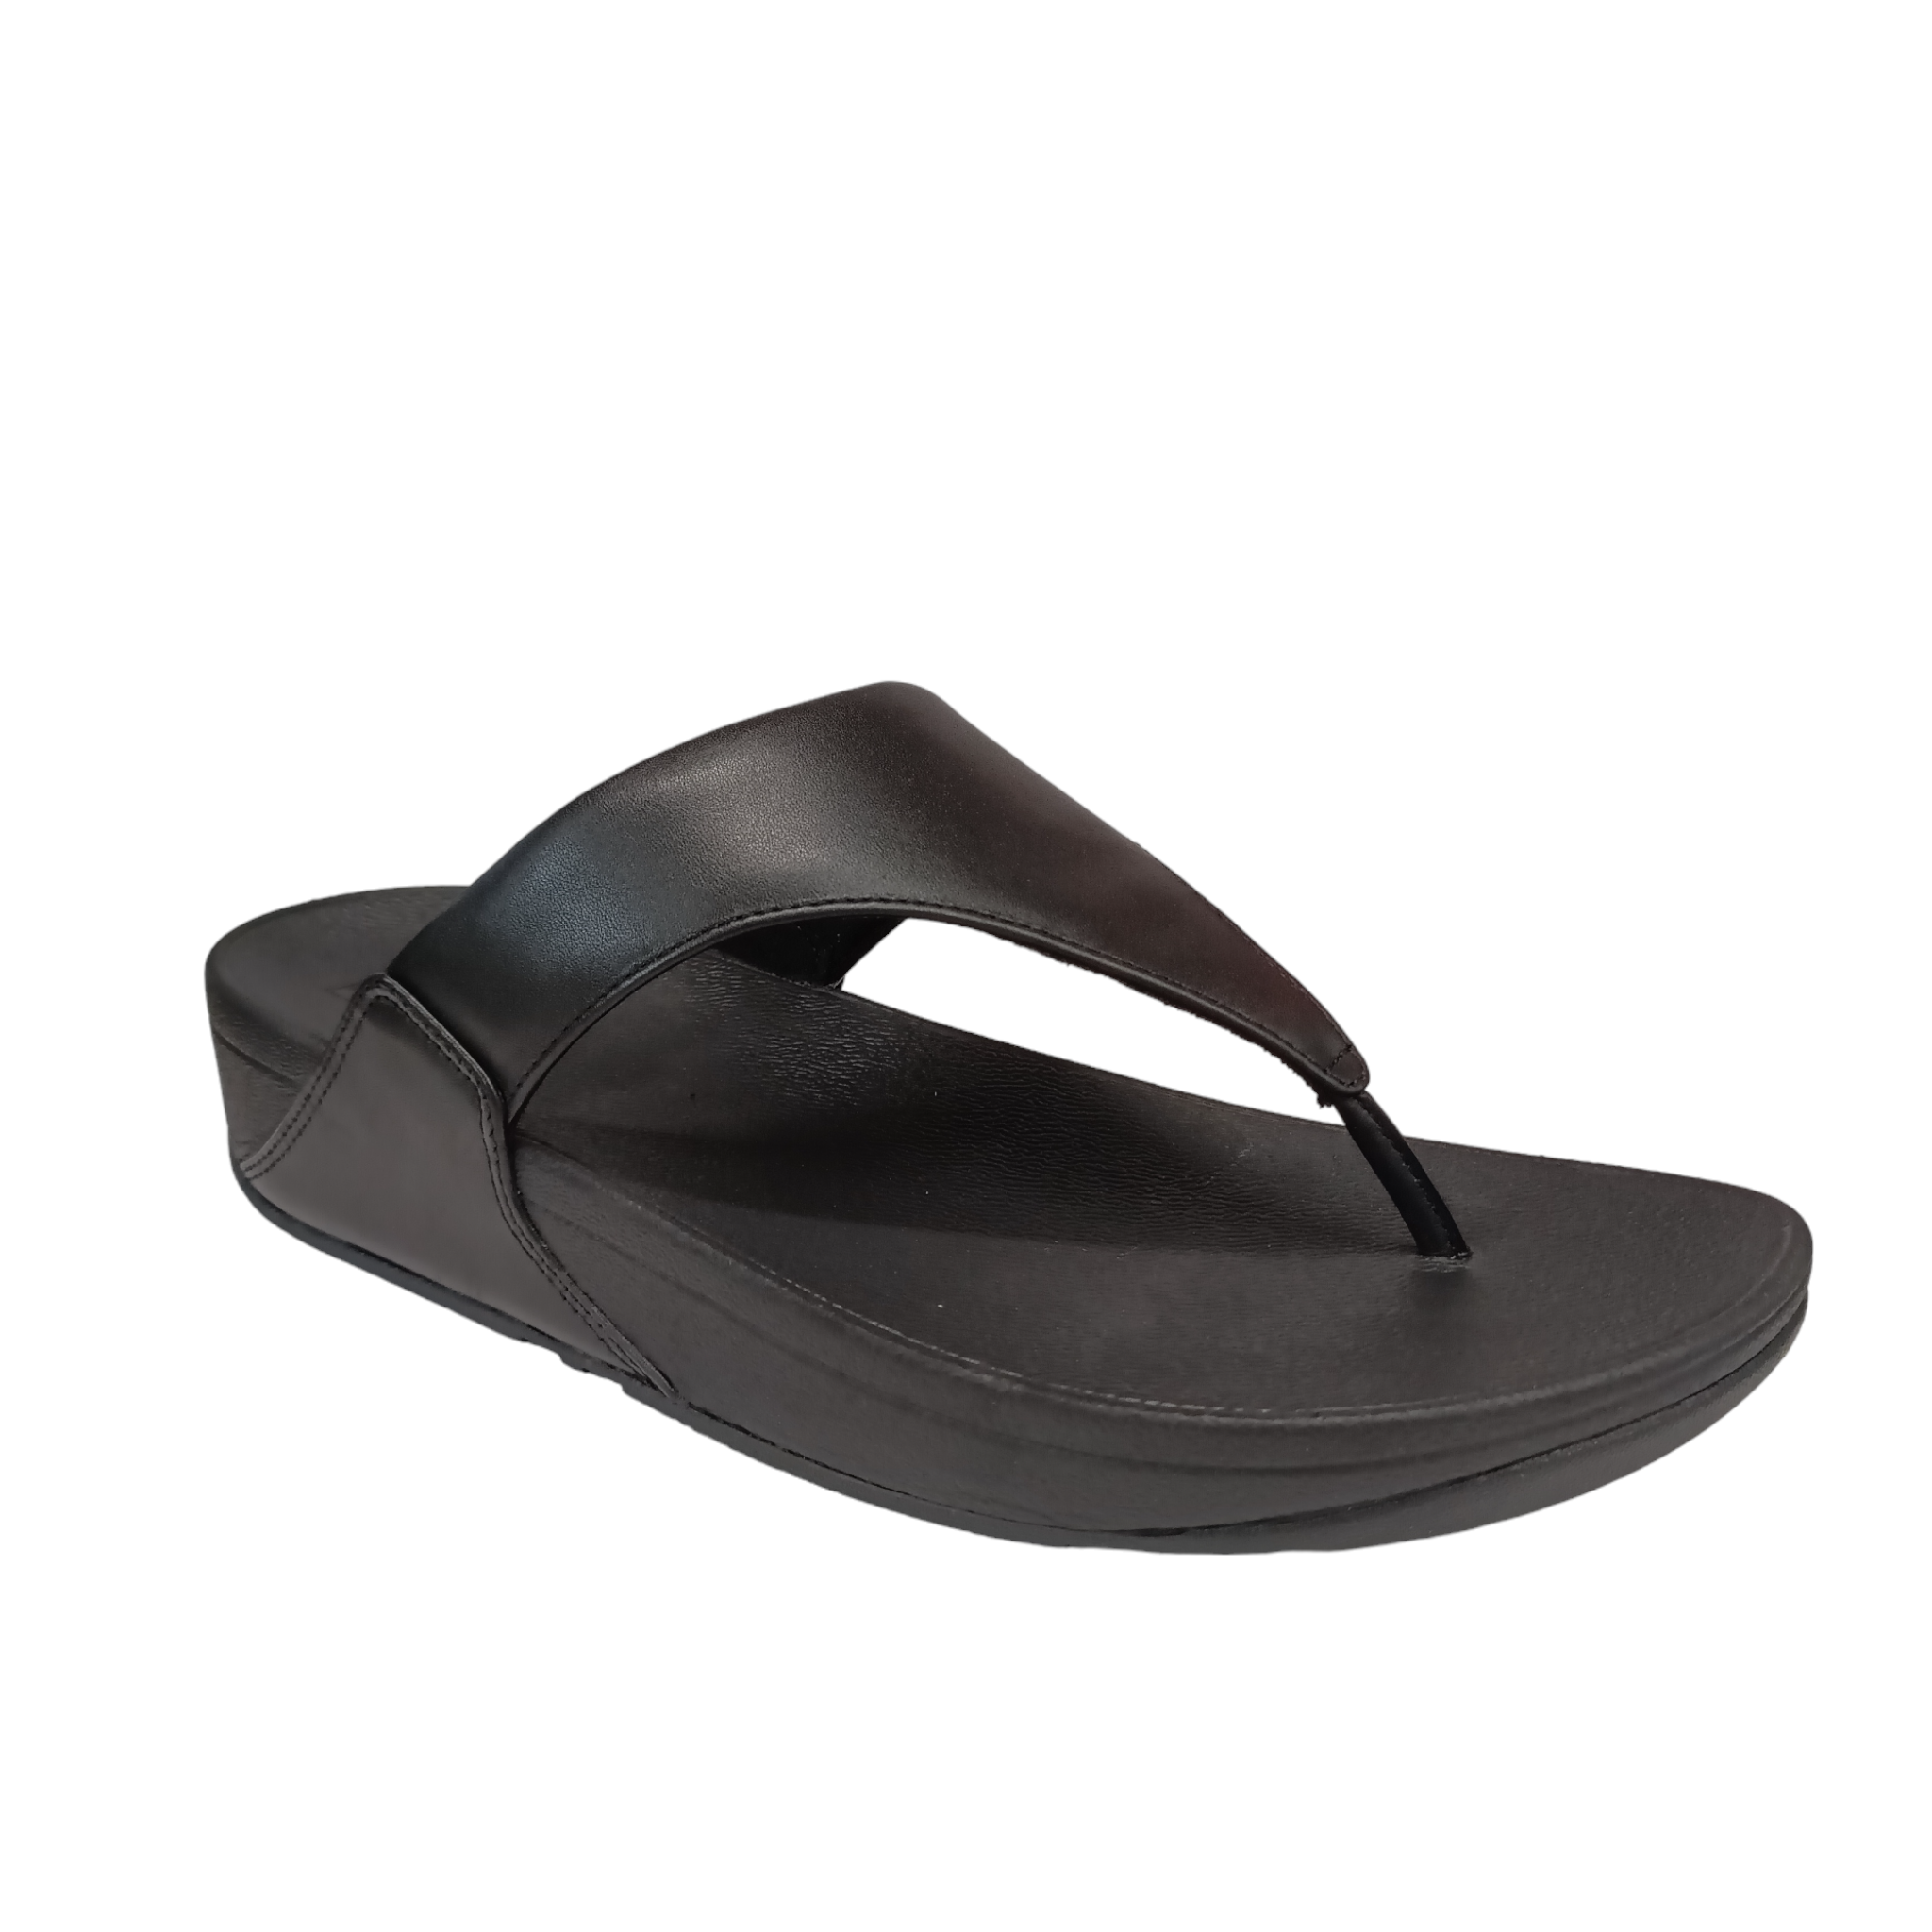 Lulu Leather Toepost - shoe&me - fitflop - Jandal - Jandals, Platform, Summer, Womens